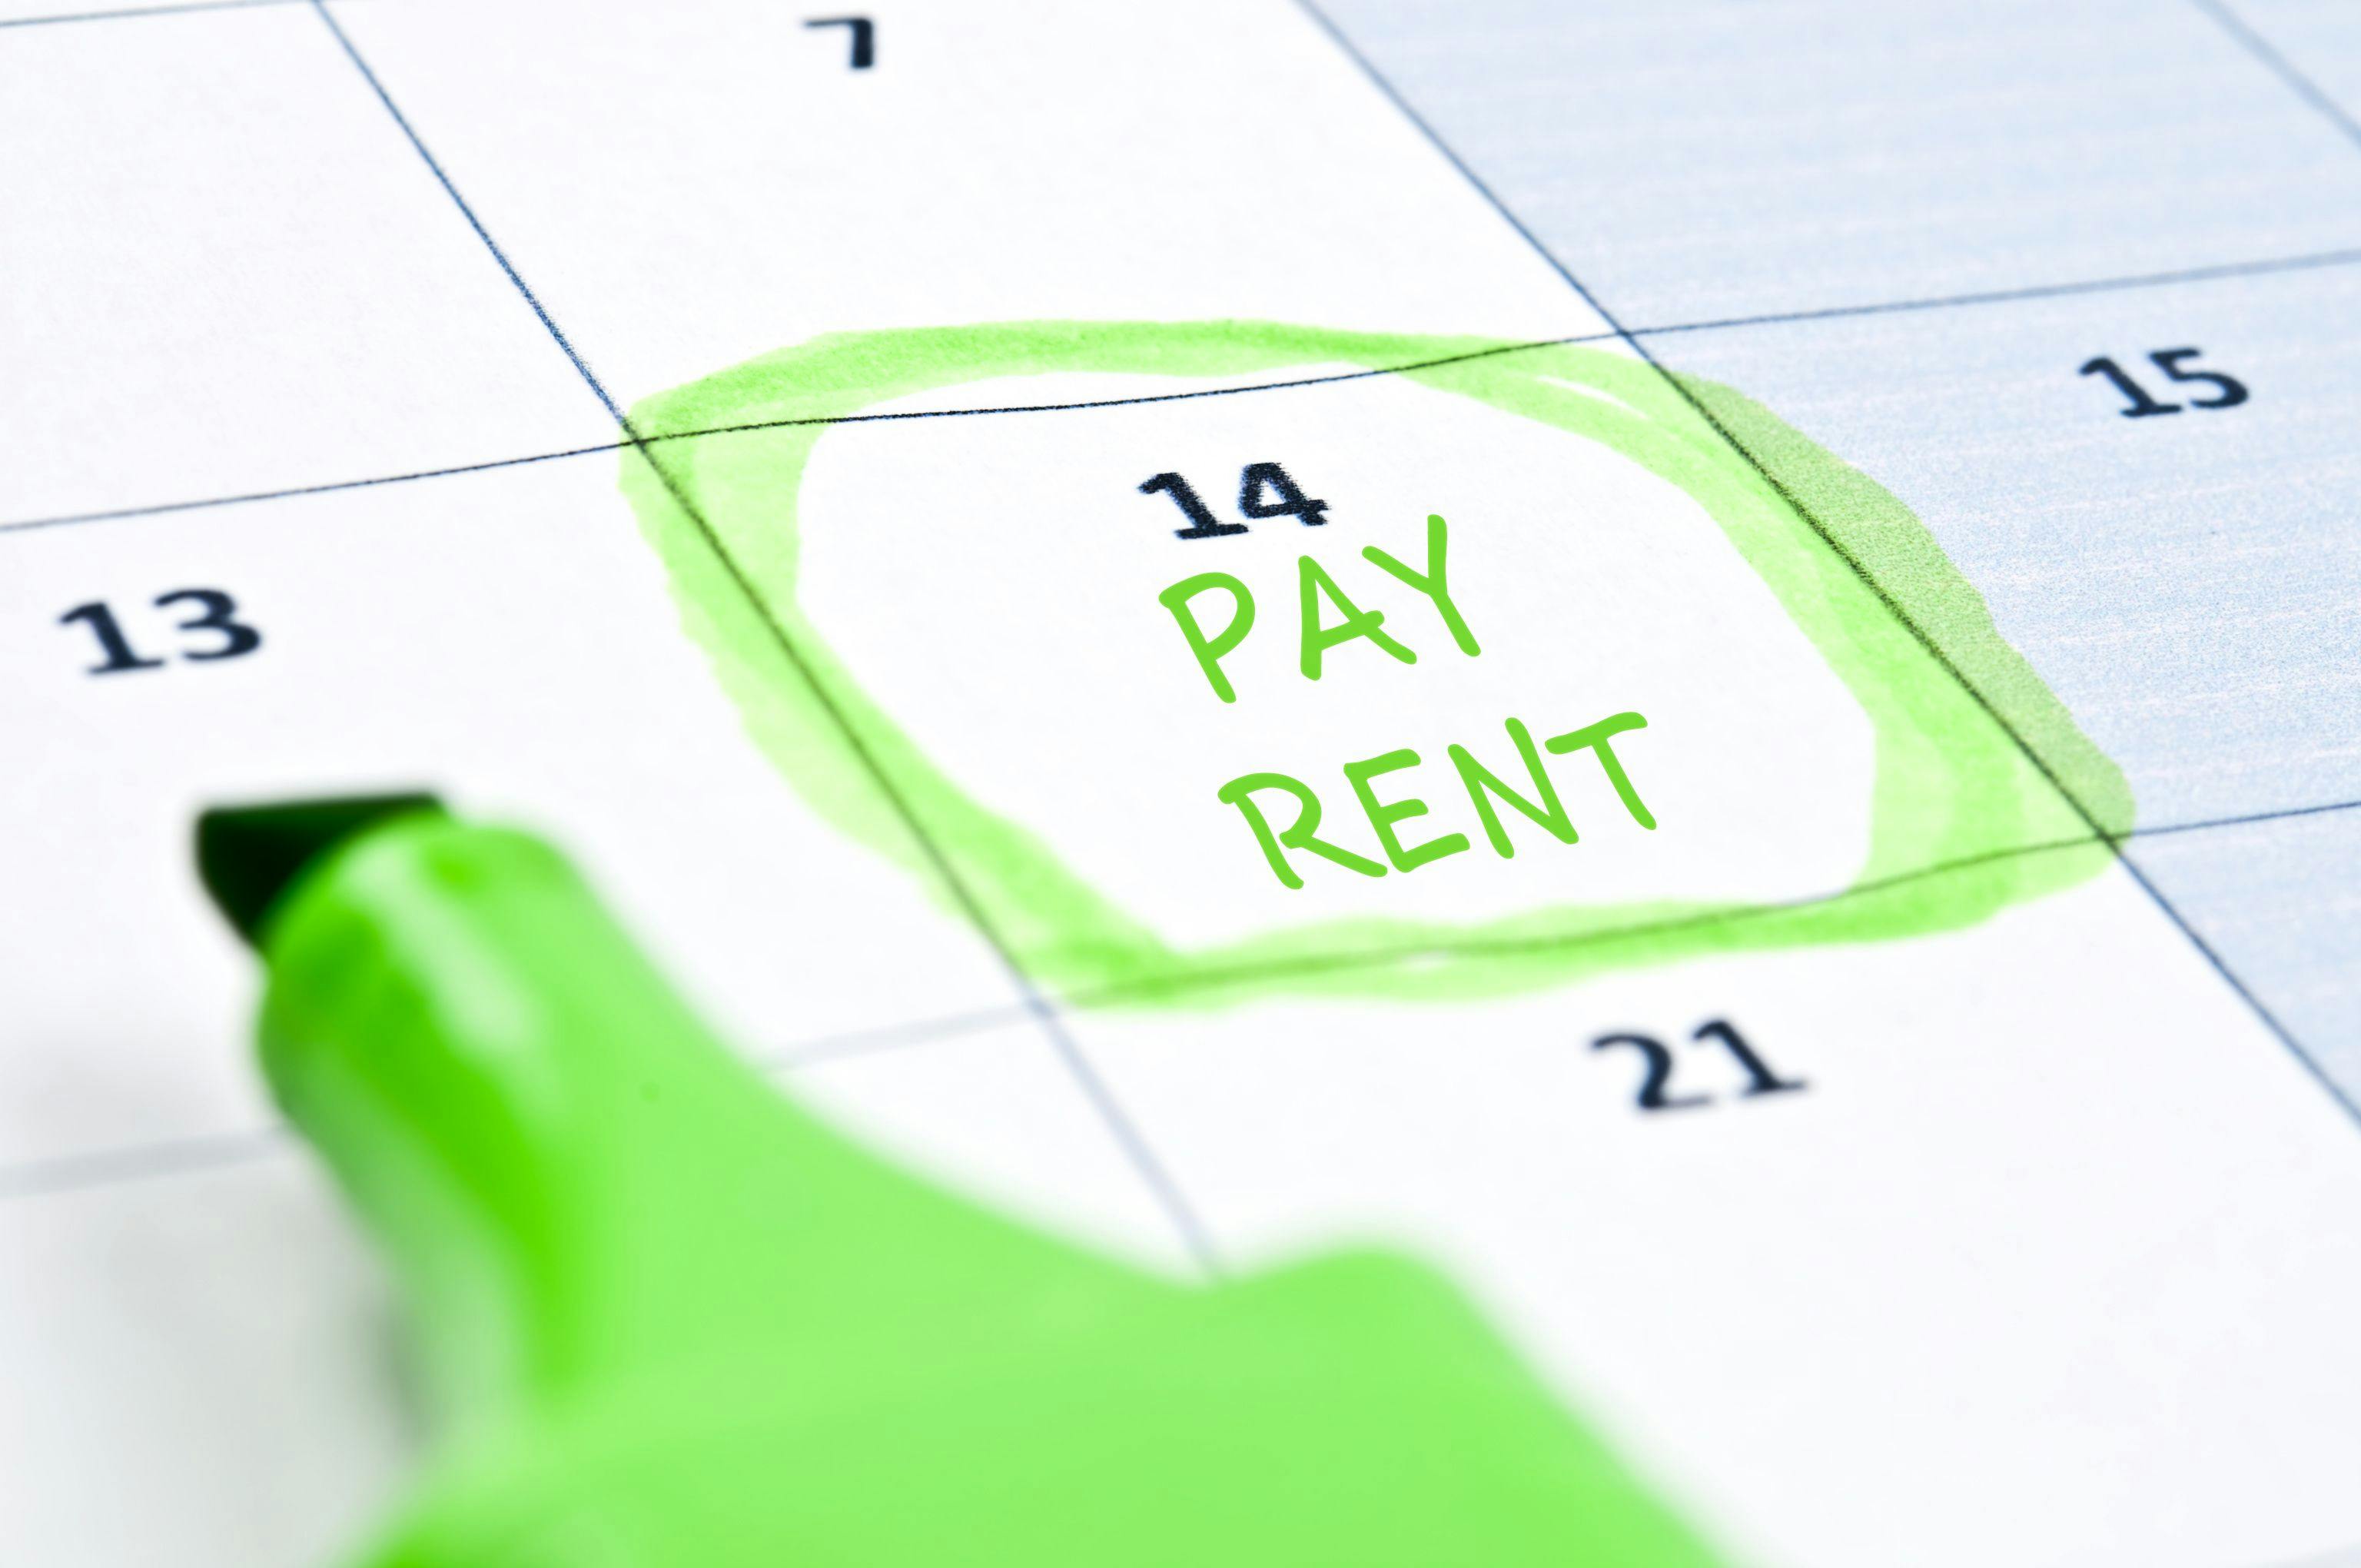 pay rent written on schedule